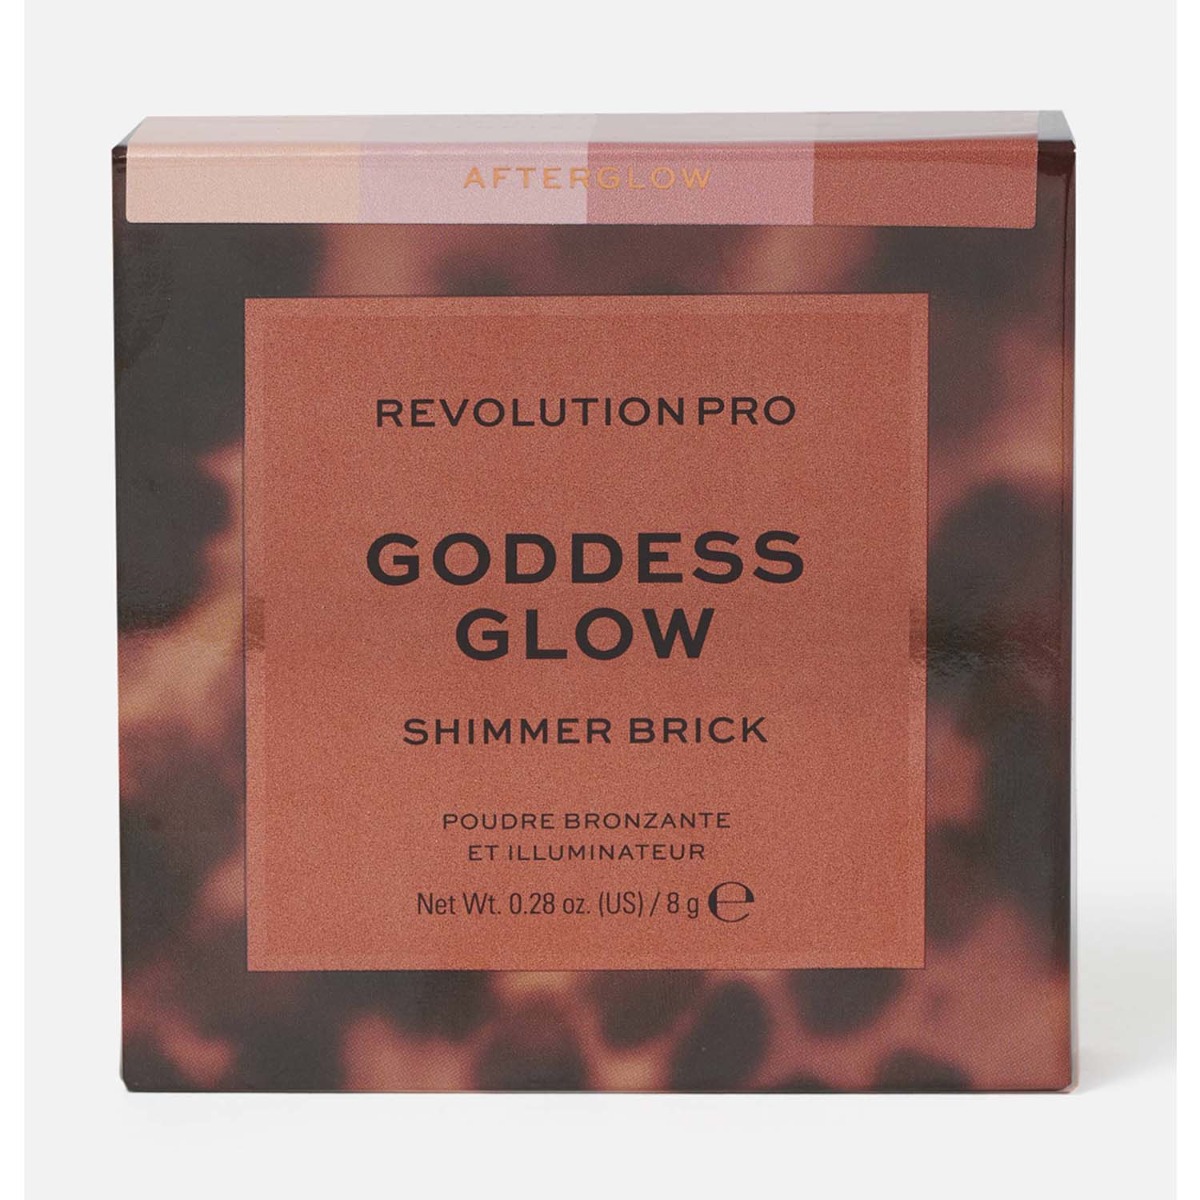 Revolution Pro Goddess Glow Shimmer Brick Afterglow, 8gm